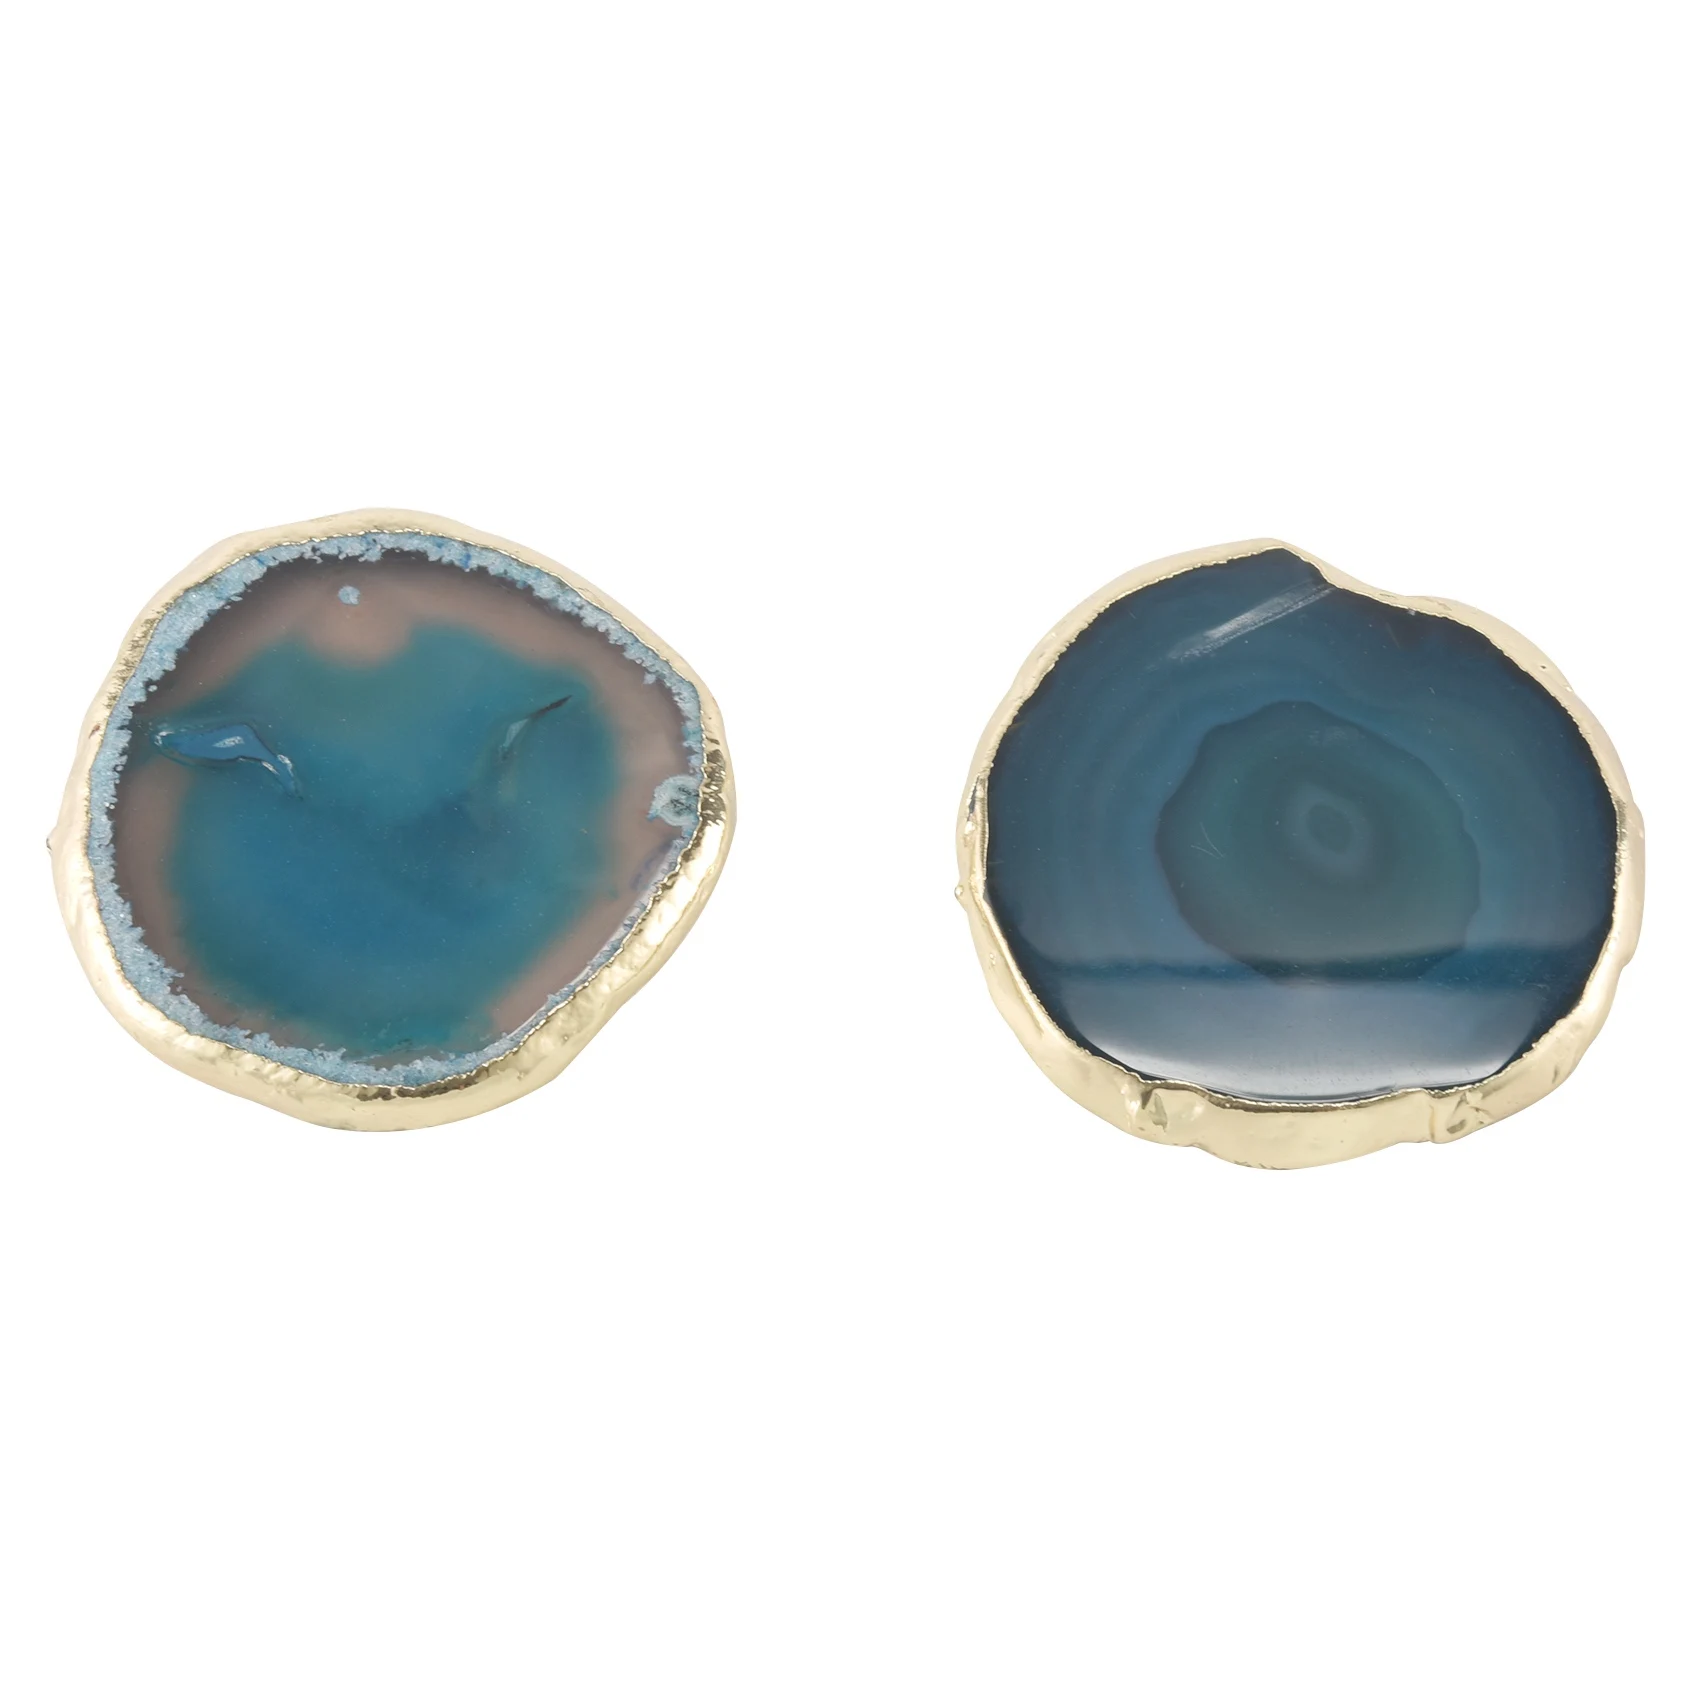 

2Pcs Agate Slice Blue Agate Coaster Teacup Tray Decorative Design Stone Coaster Gold Edges Home Decor Gemstone Coaster